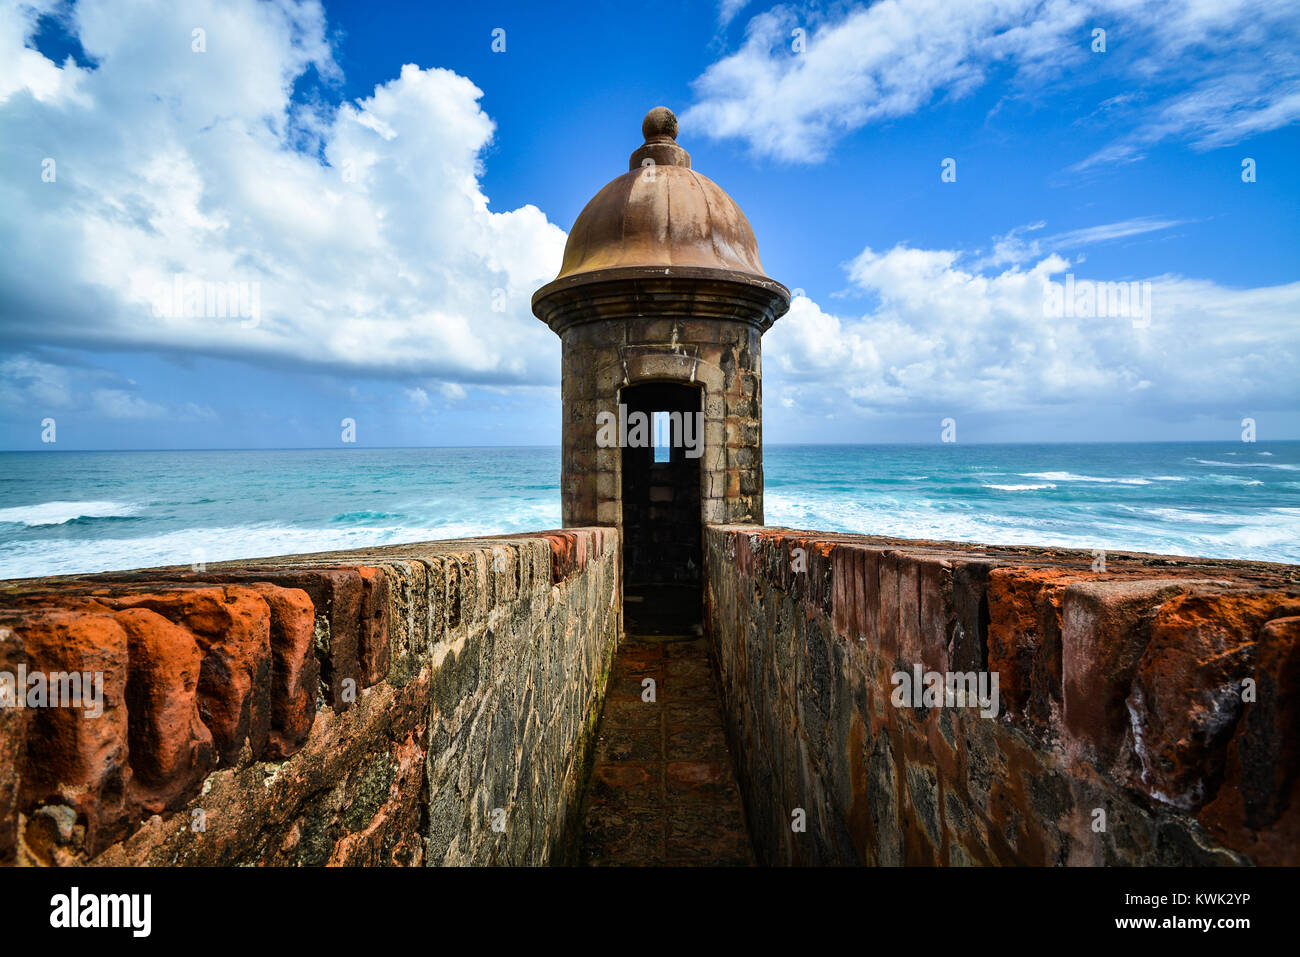 San Juan Puerto Rico, Castillo de San Cristobal, Sentry Box, Old San Juan, Caribbean island. Stock Photo